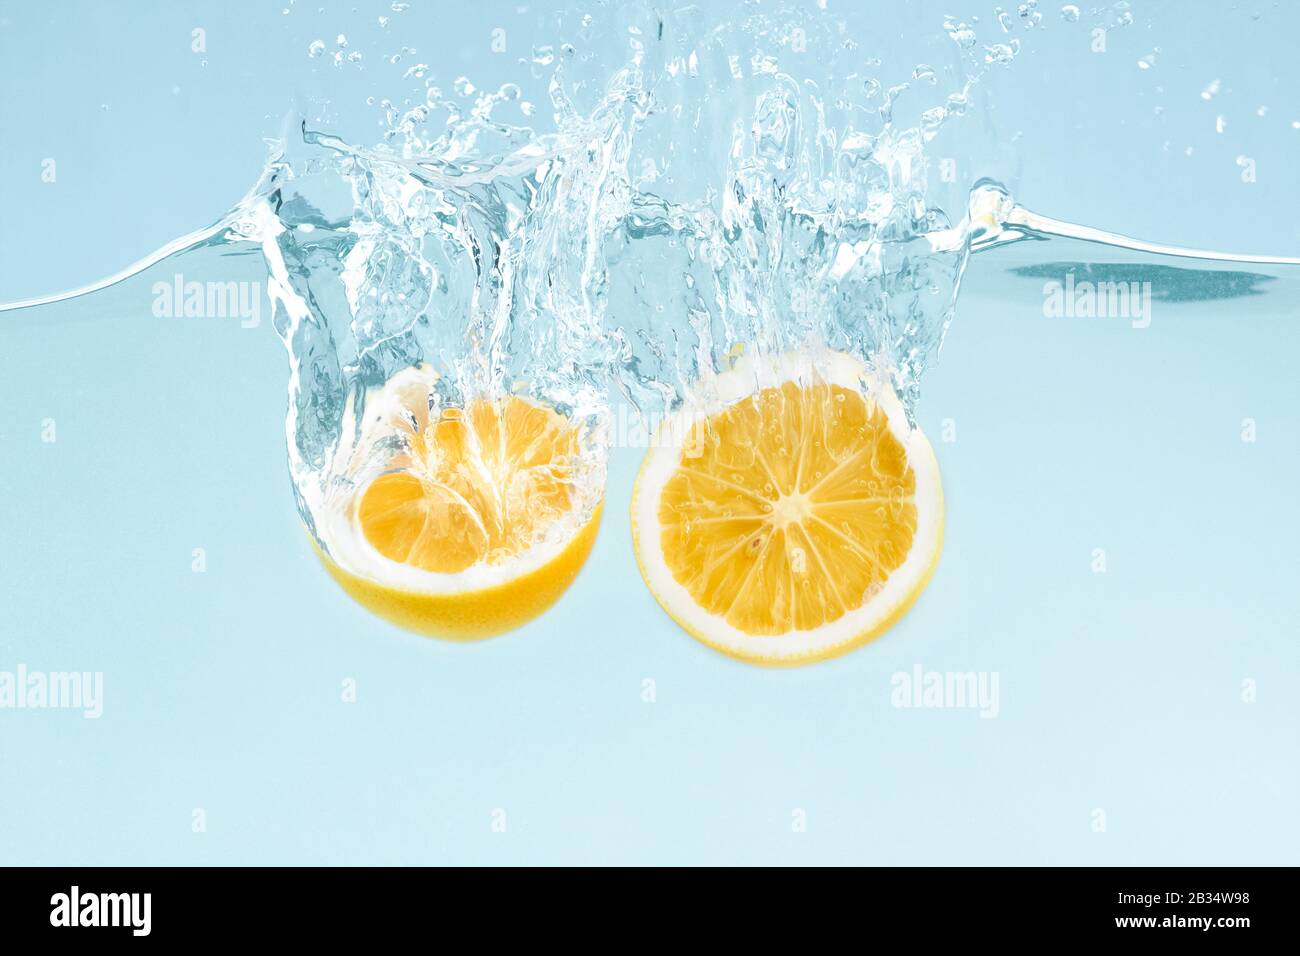 Citrus splash. Lemon halves splattering into clear water on blue background Stock Photo